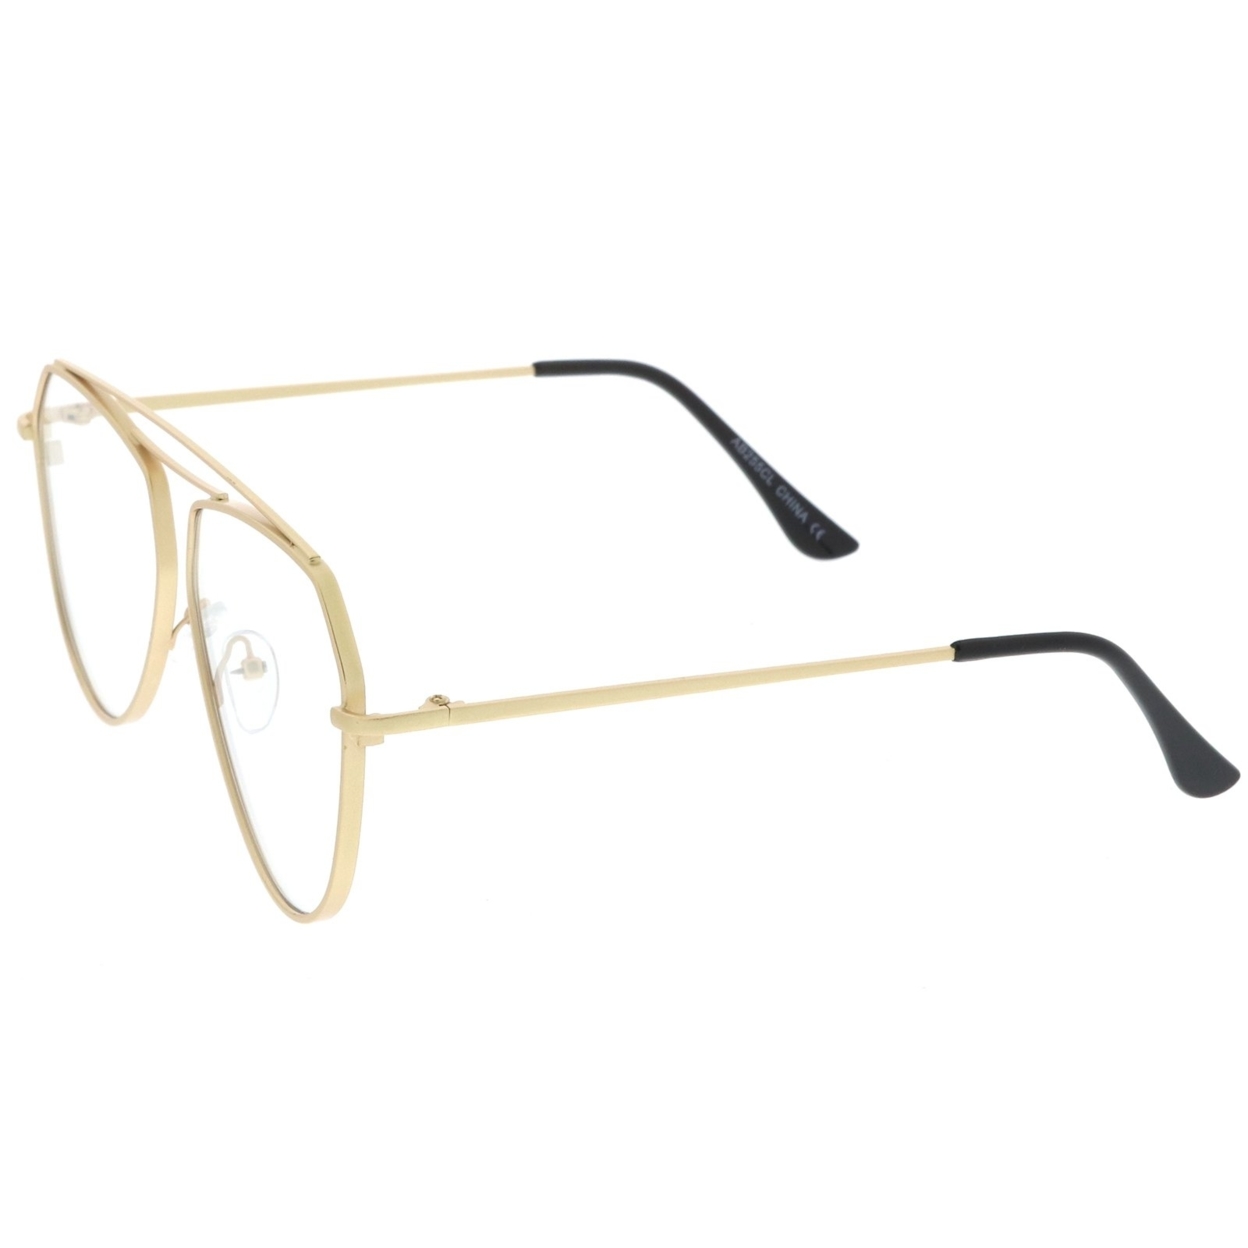 Modern Matte Metal Frame Double Nose Bridge Clear Flat Lens Aviator Eyeglasses 52mm - Gold / Clear